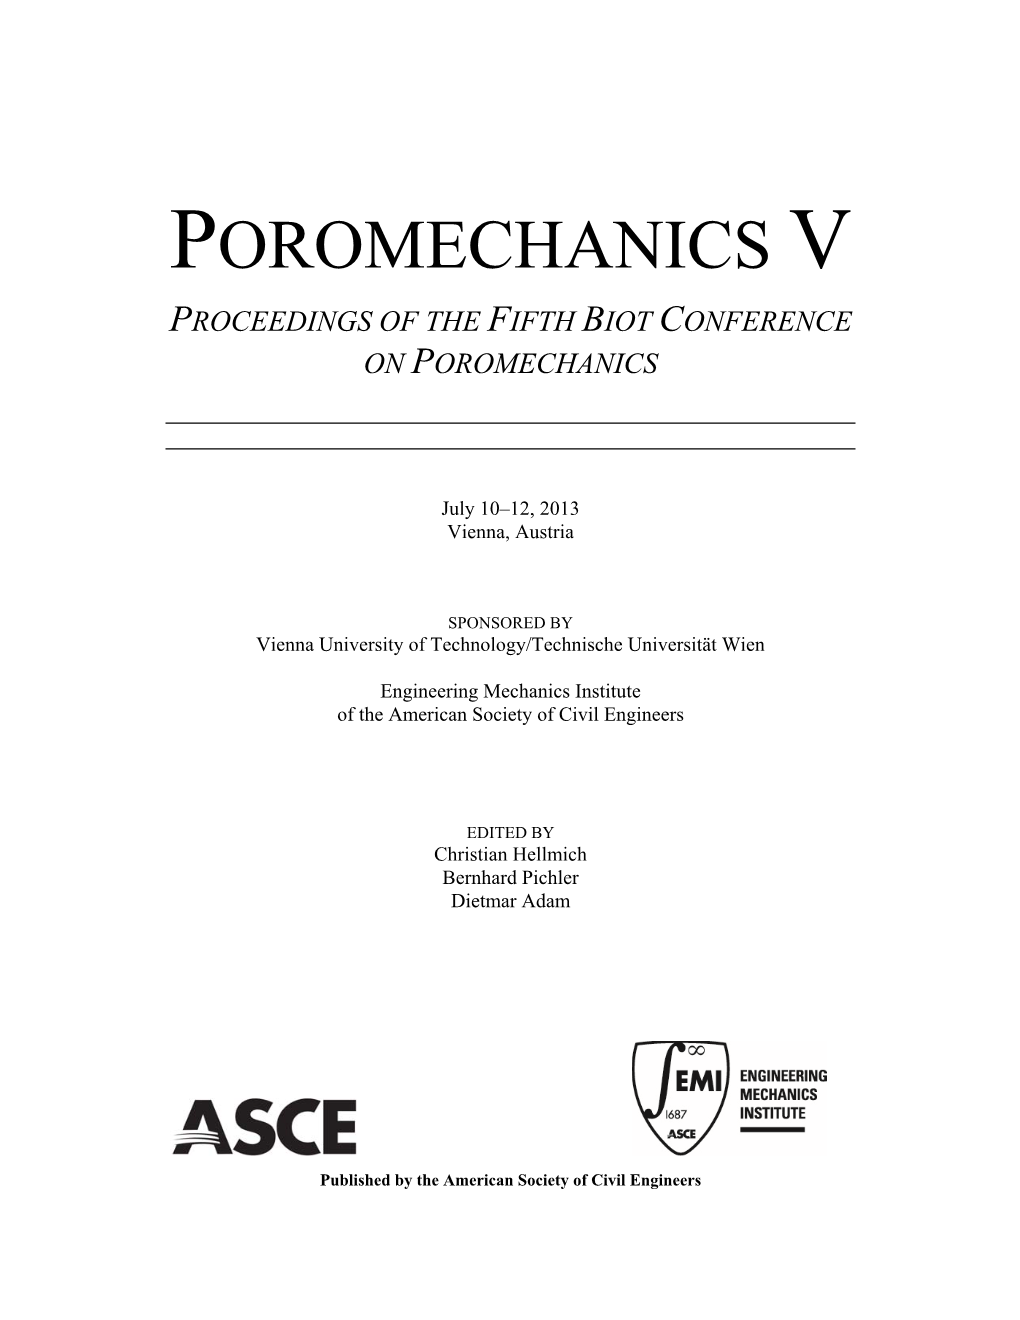 Poromechanics V Proceedings of the Fifth Biot Conference on Poromechanics